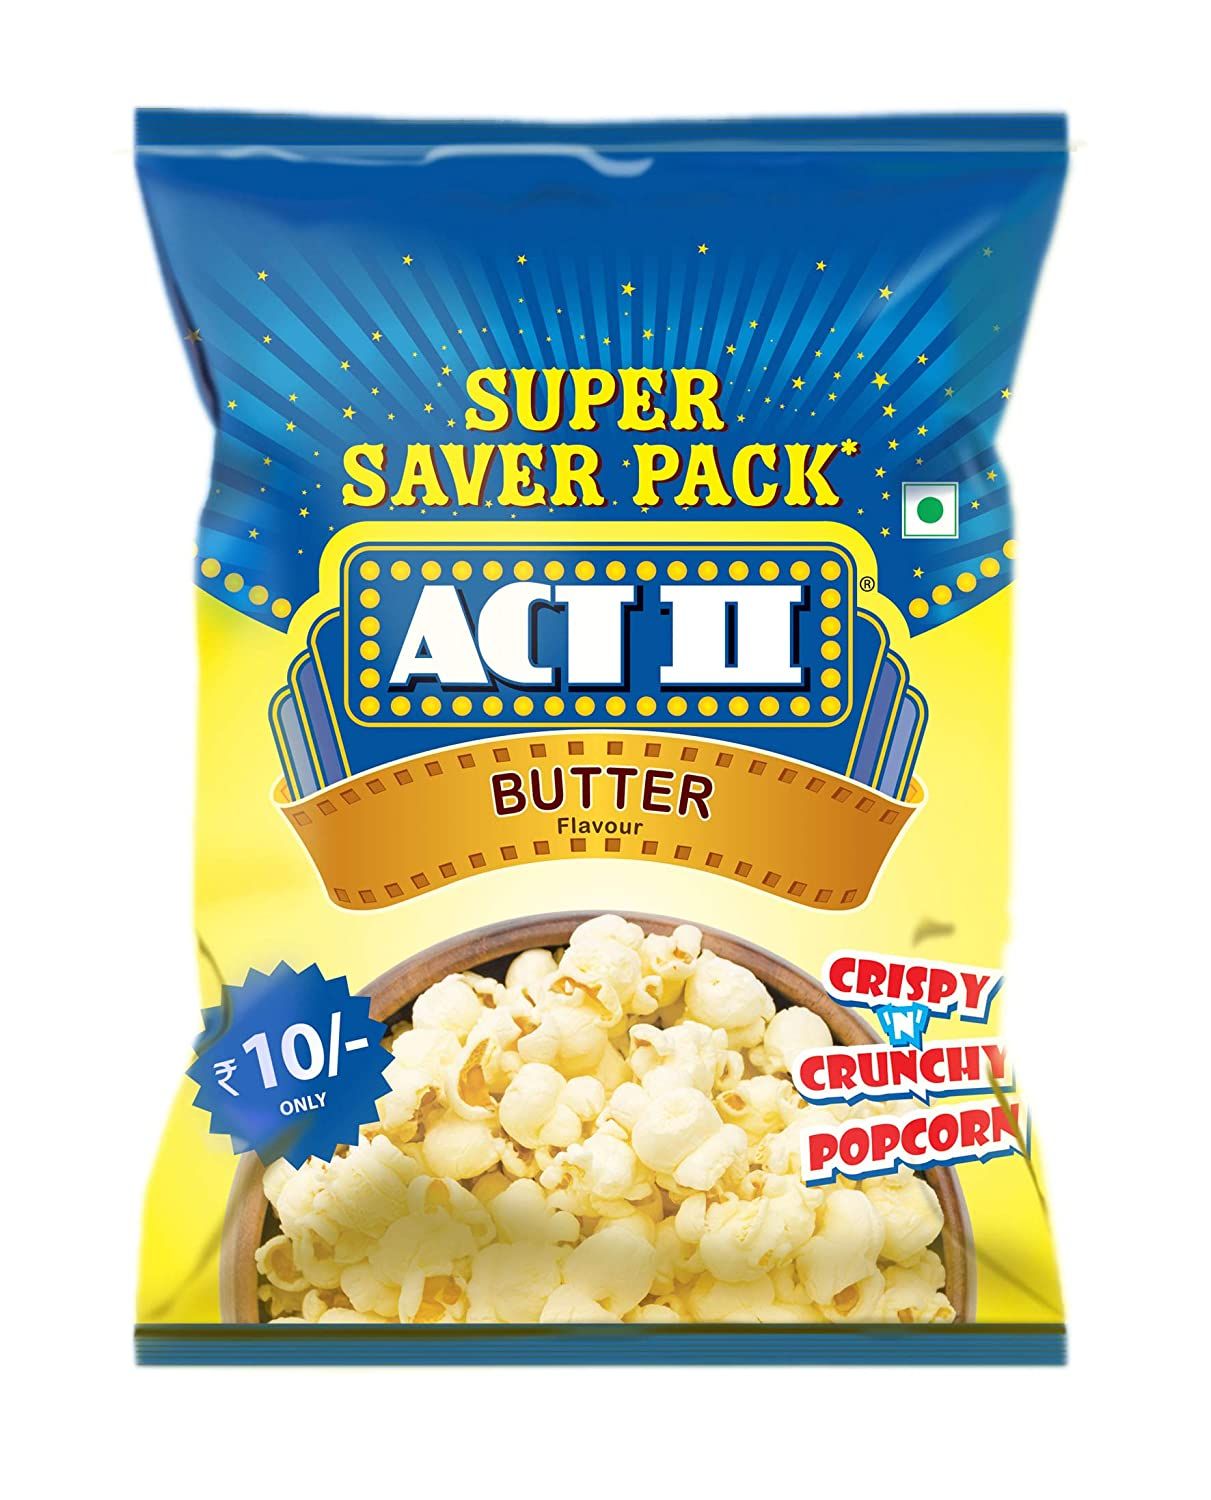 Act II RTE Butter Popcorn Image